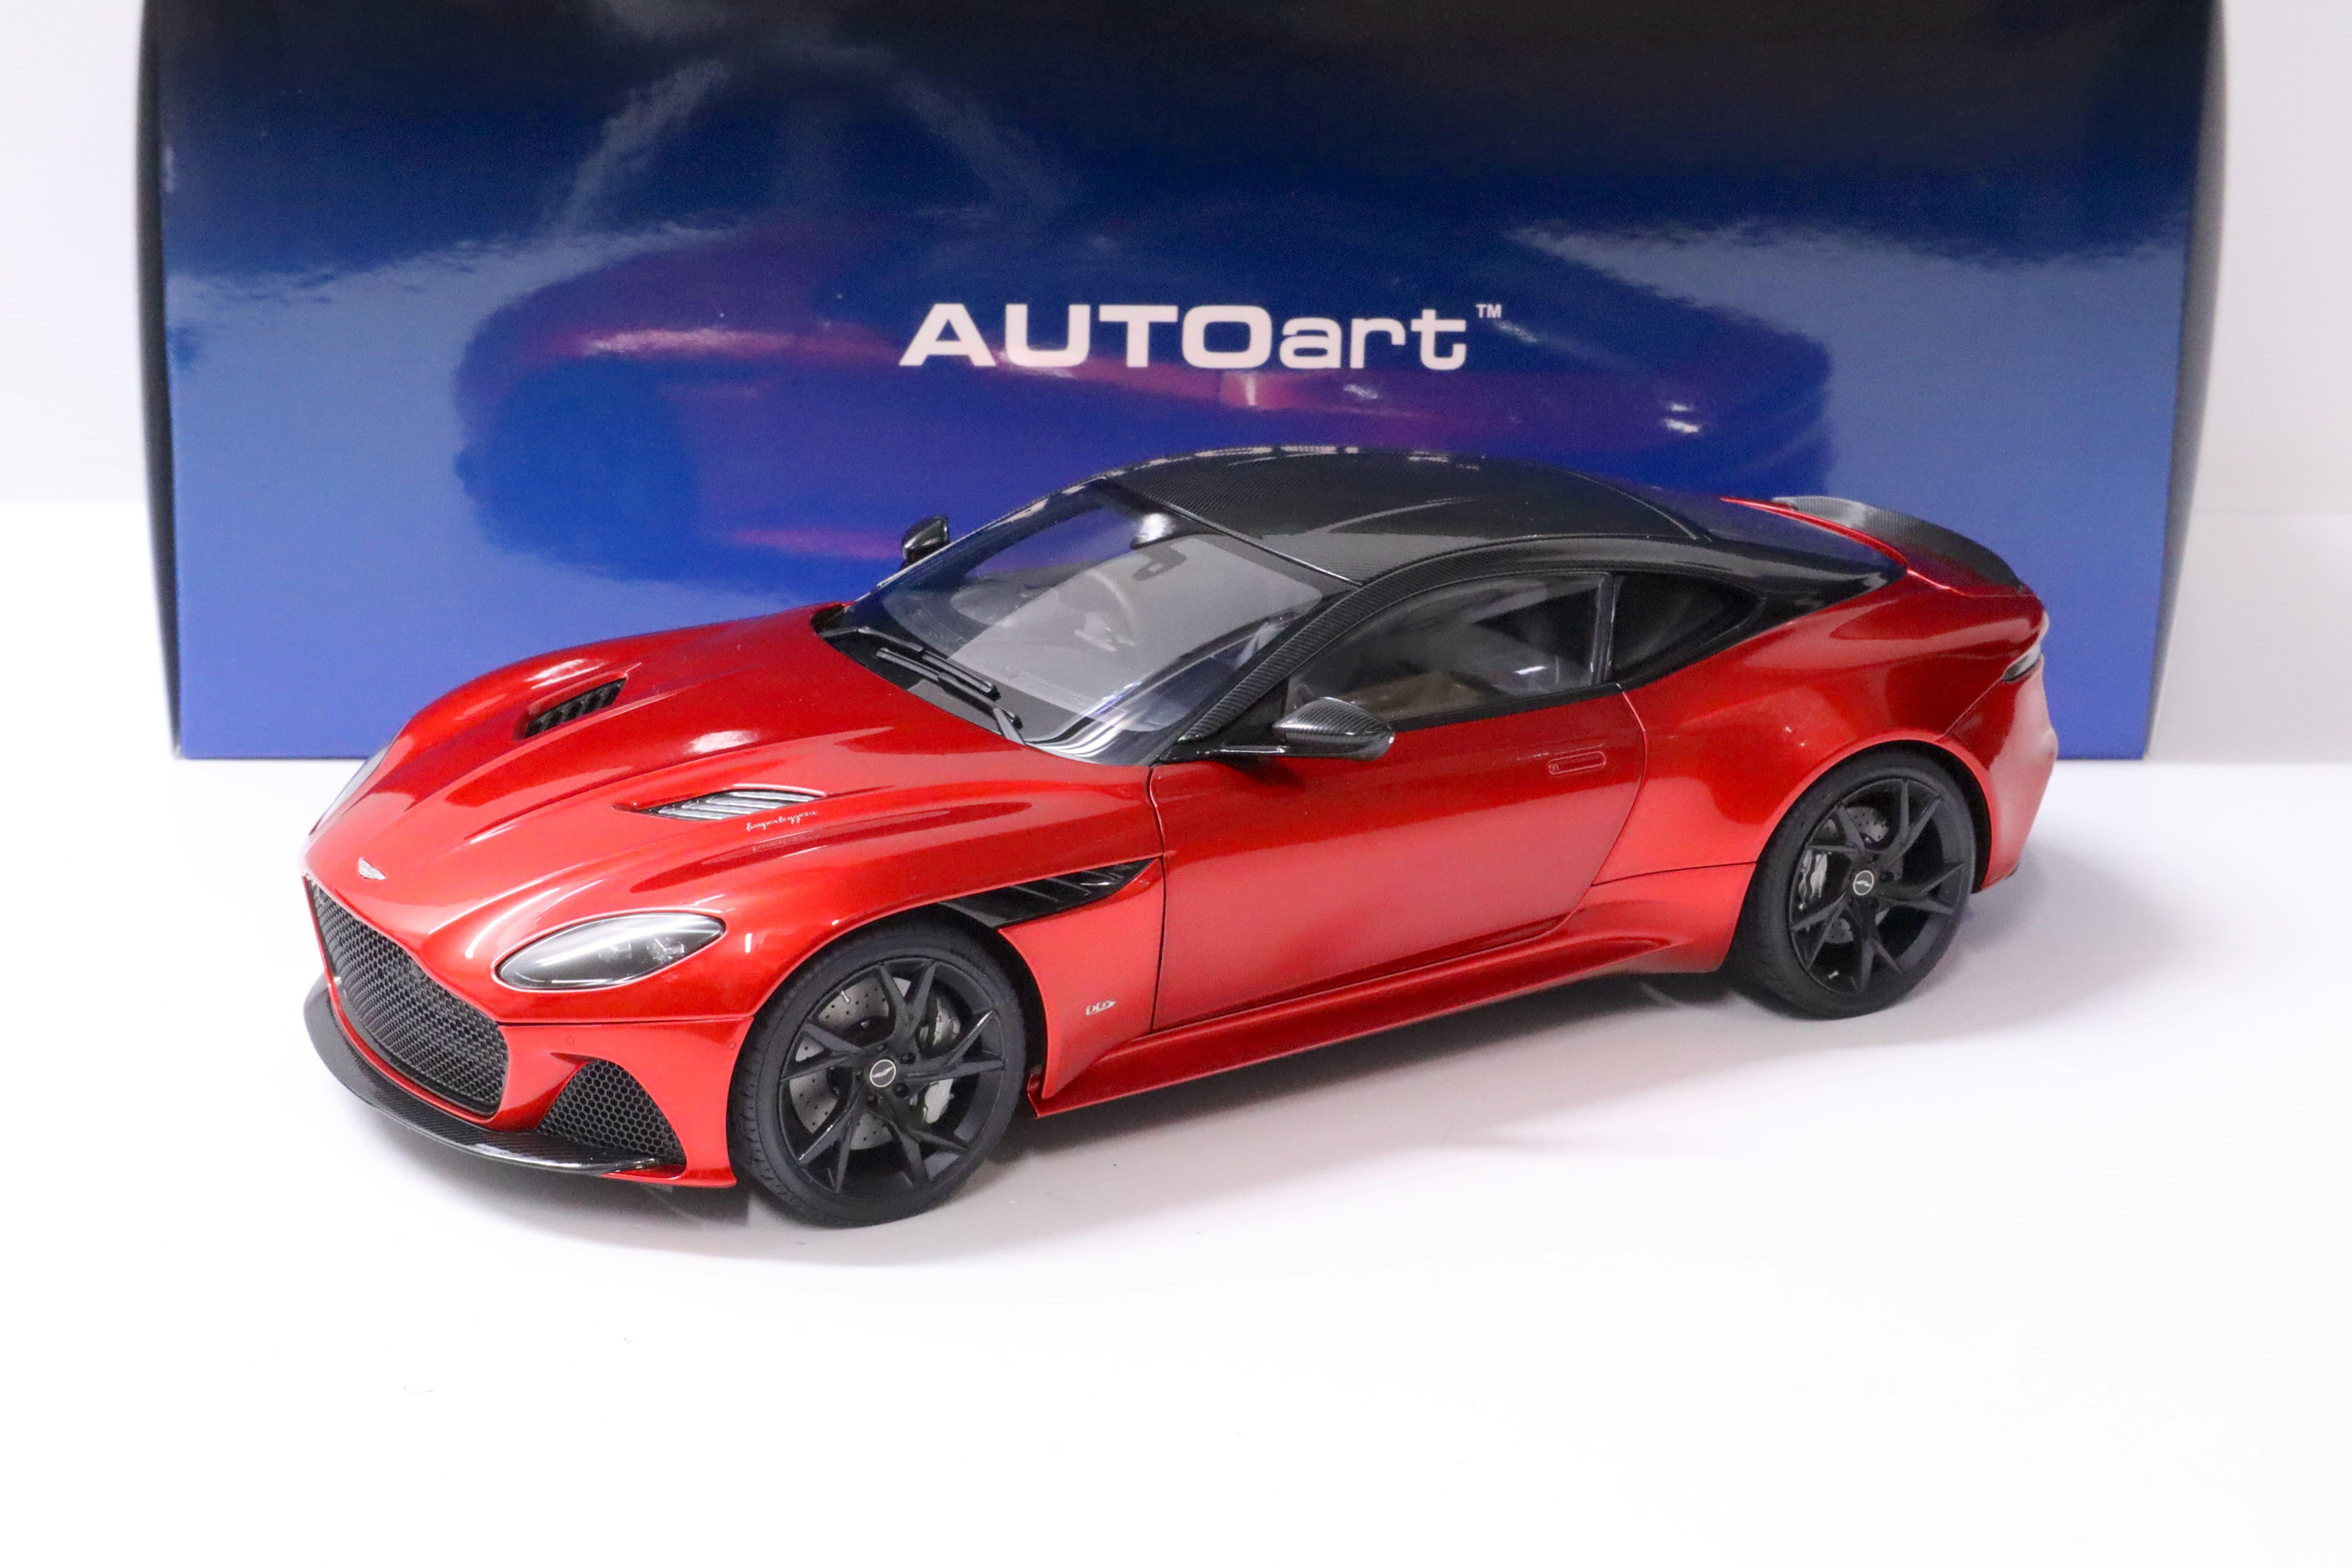 1:18 AUTOart Aston Martin DBS Superleggera 2019 Hyper red